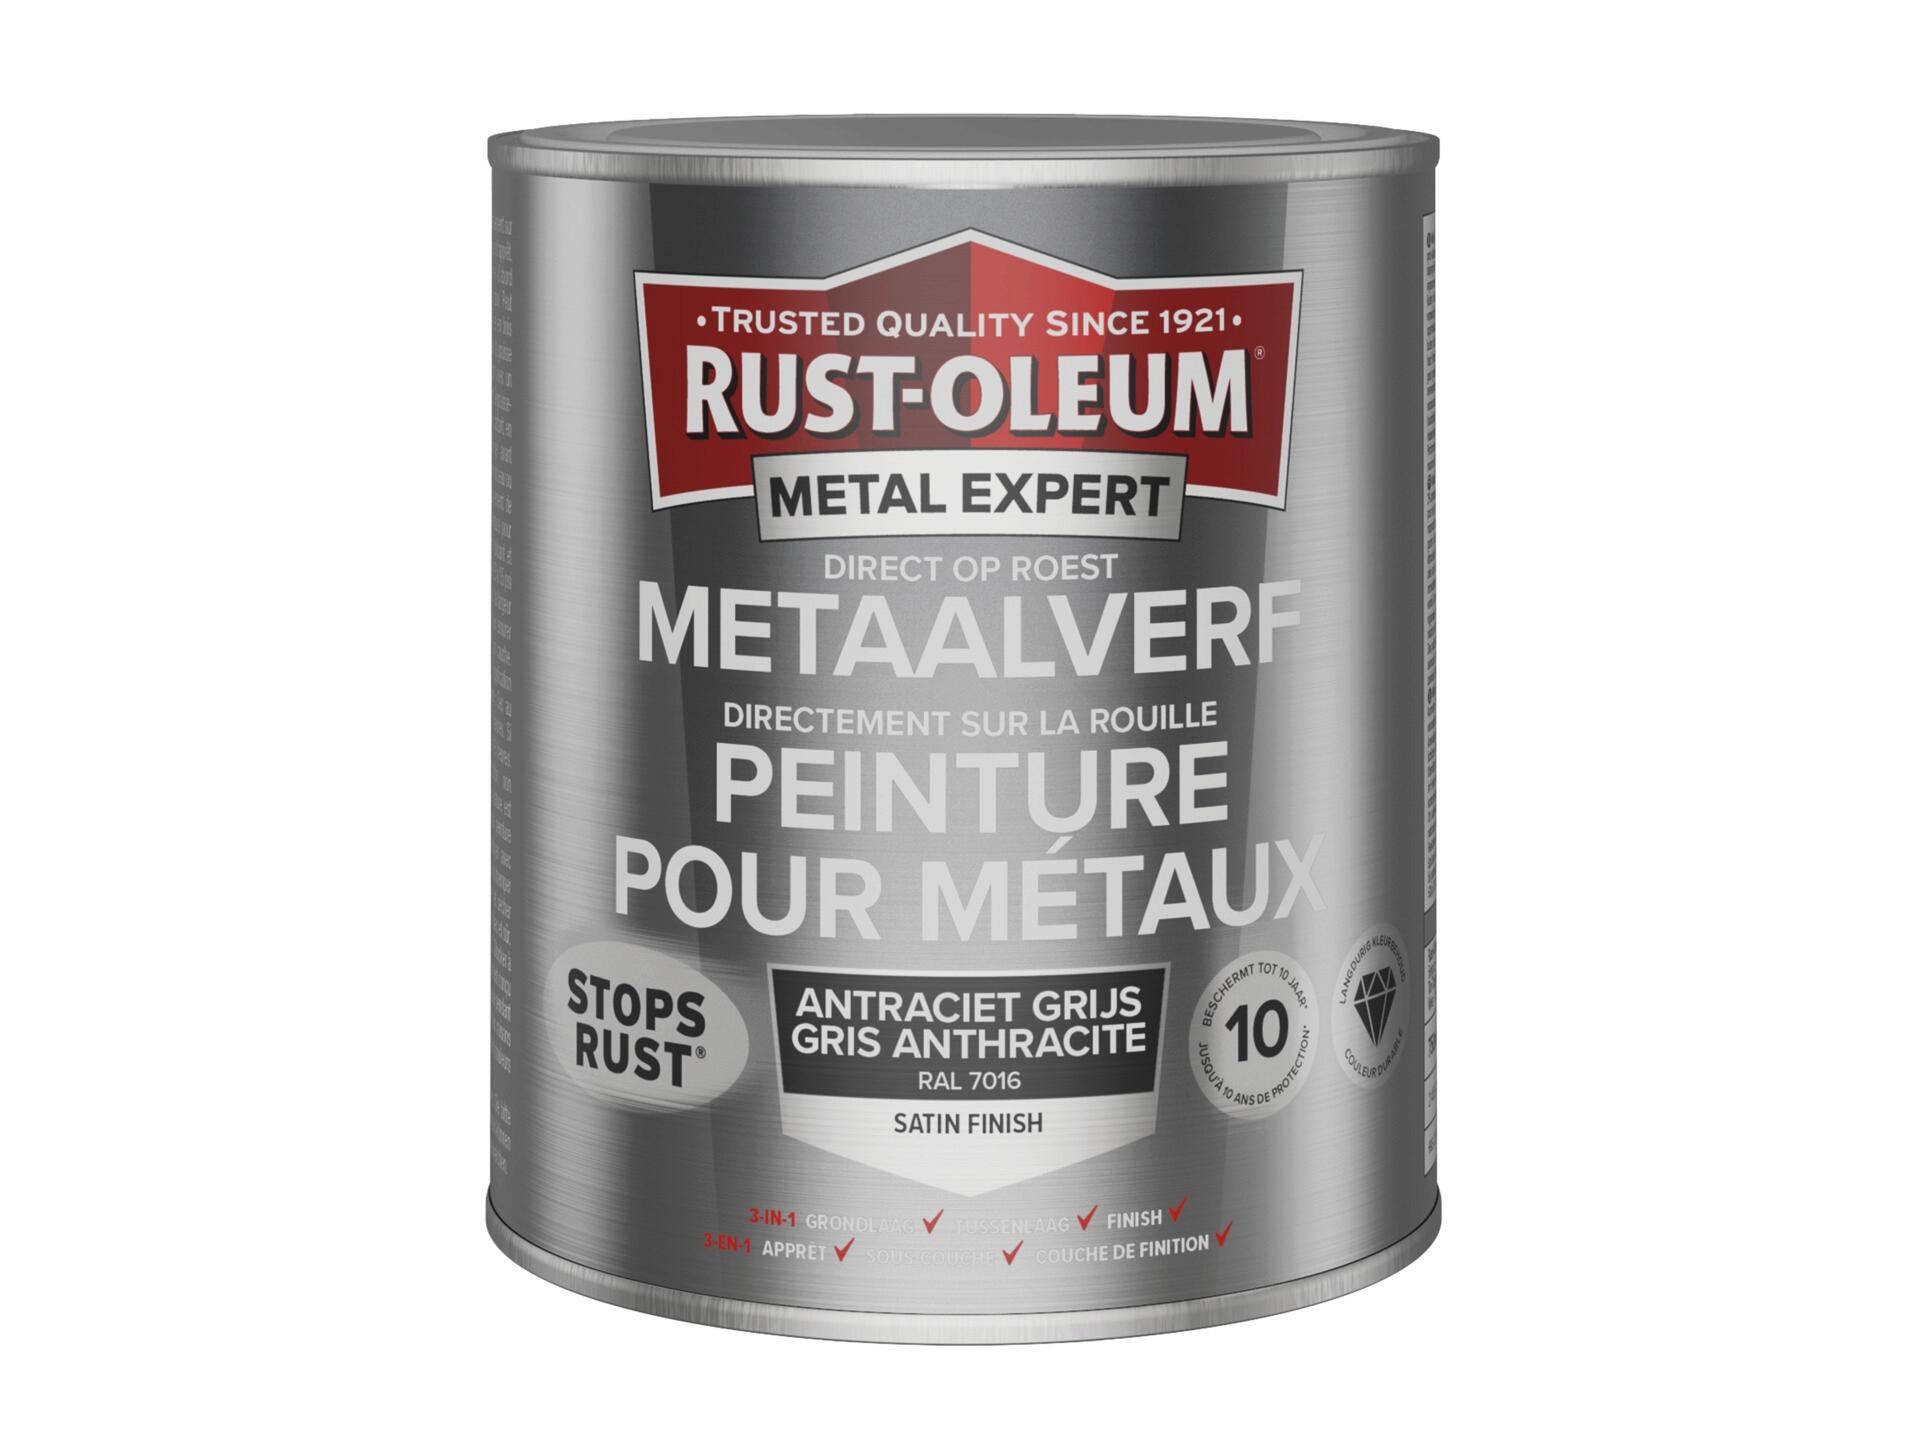 Rust-oleum Metal Expert peinture pour métaux satin 750ml gris anthracite